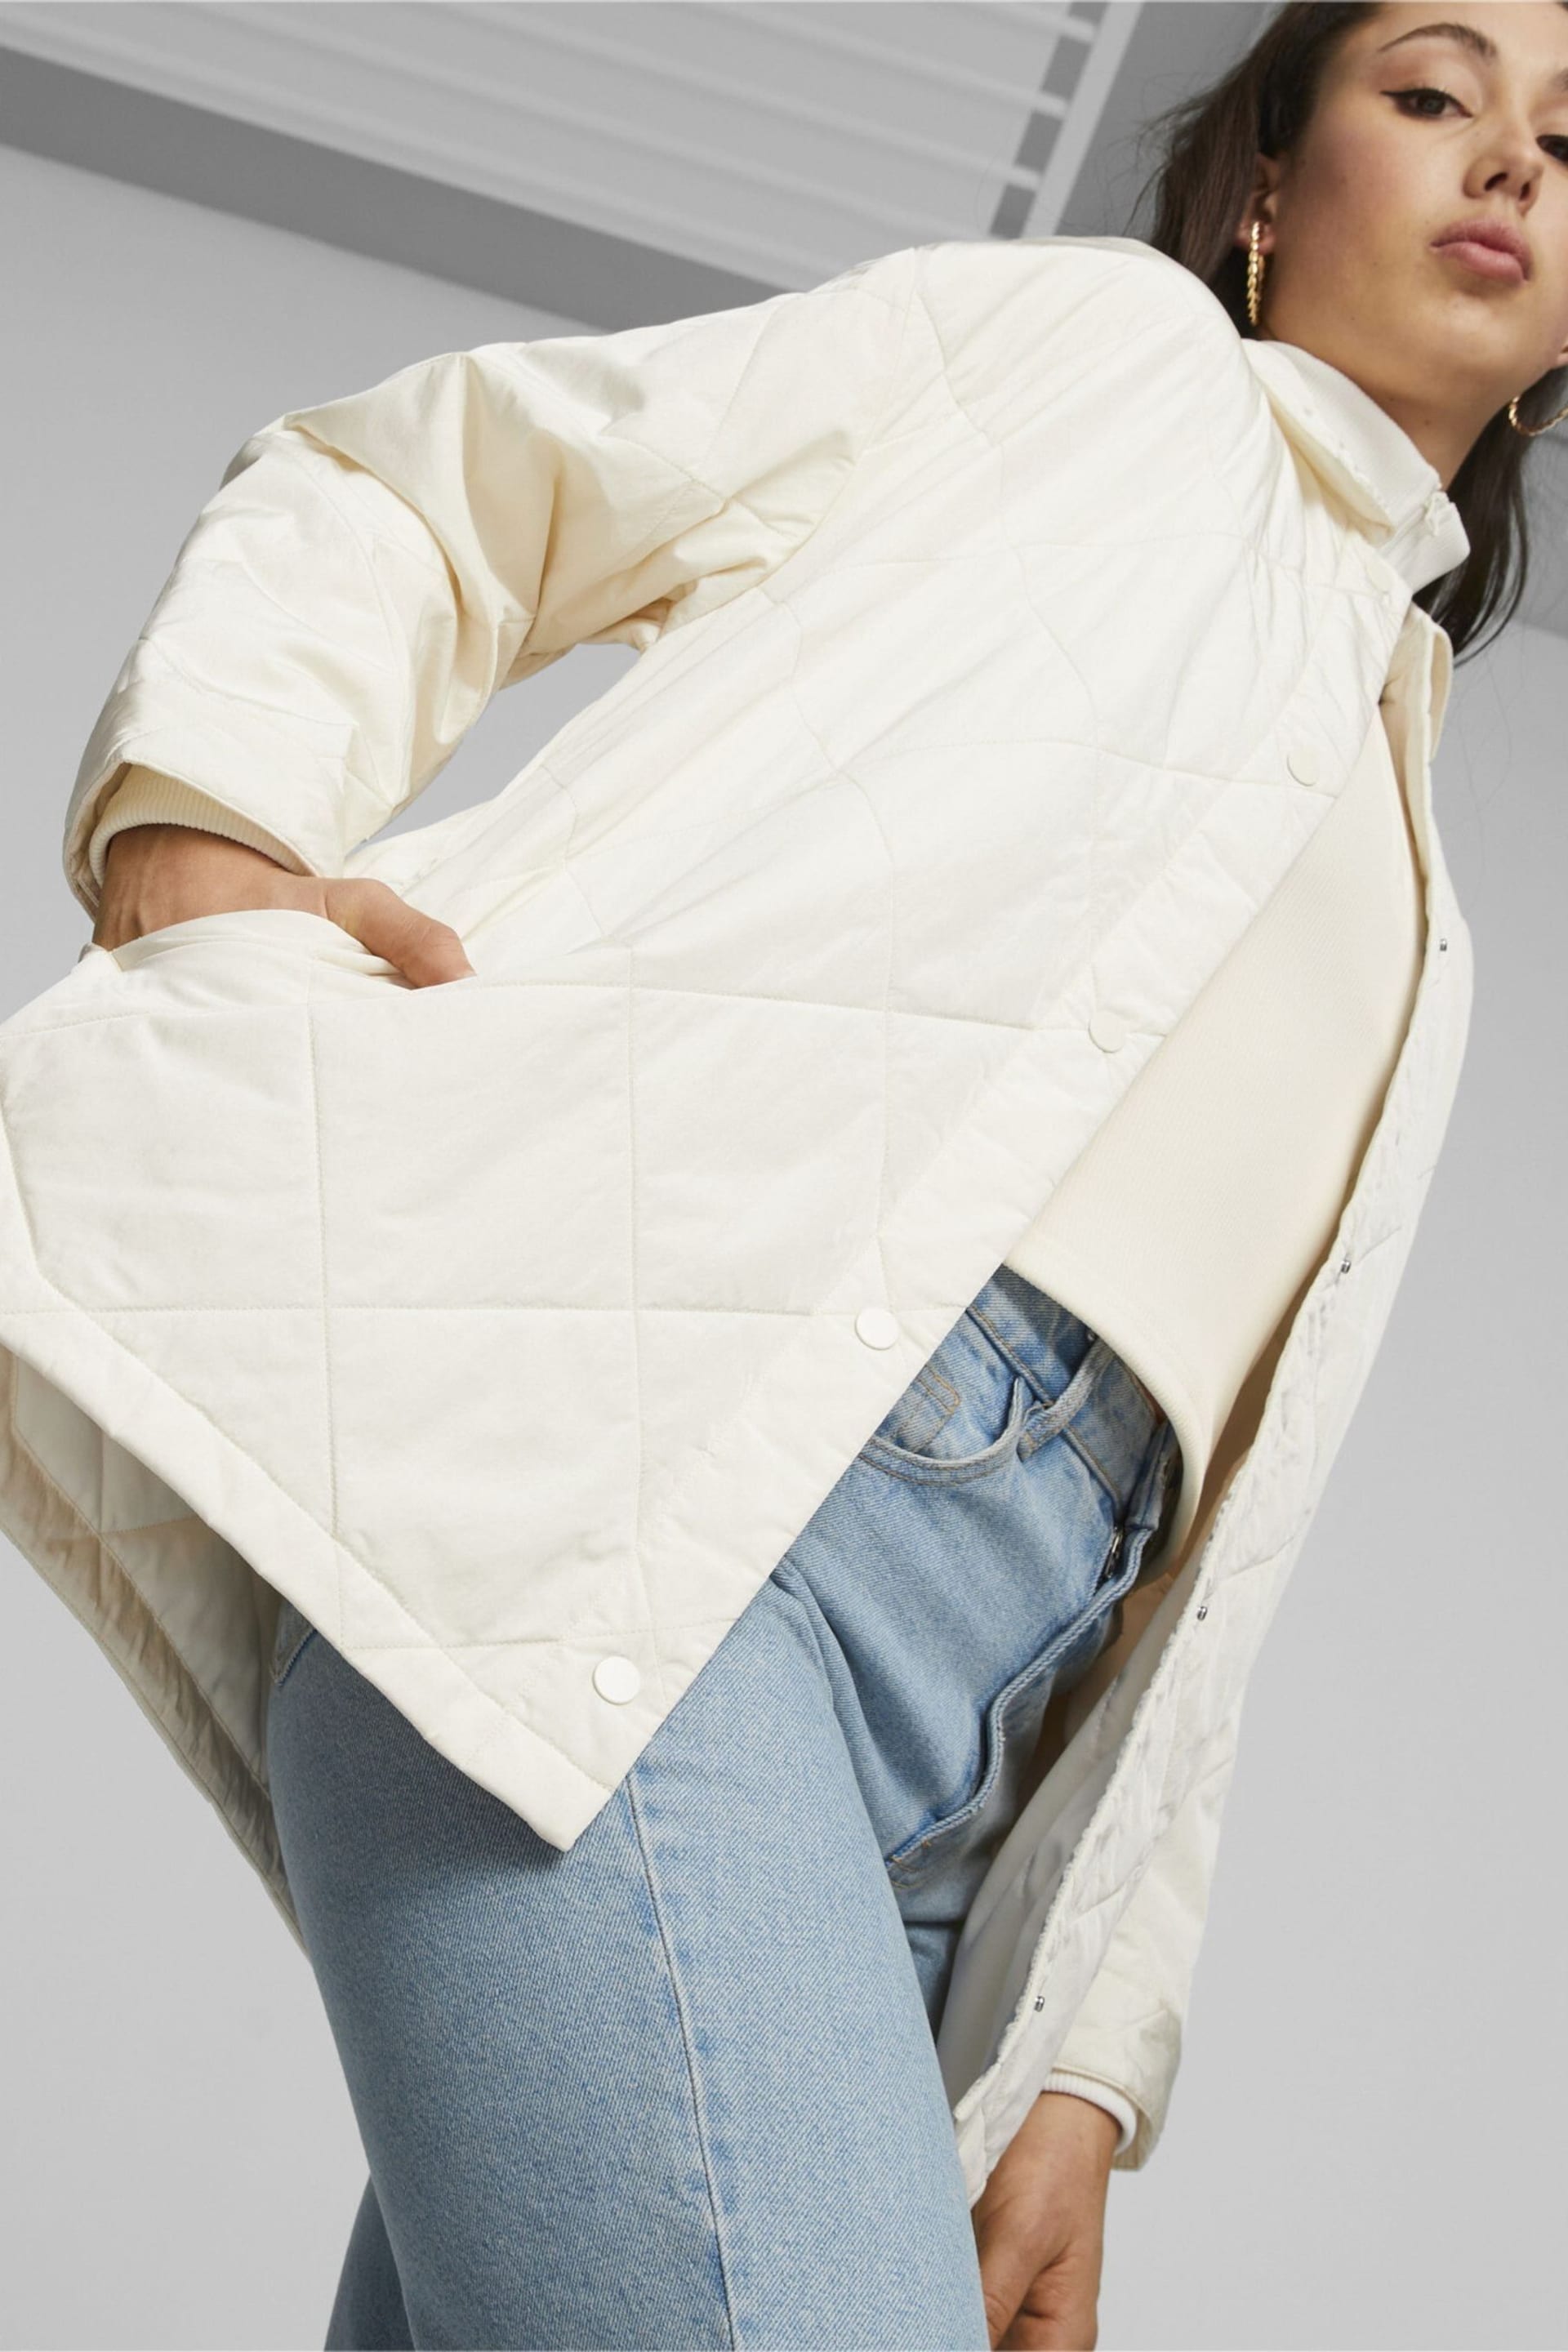 Puma White Classics Womens Chore Jacket - Image 4 of 7